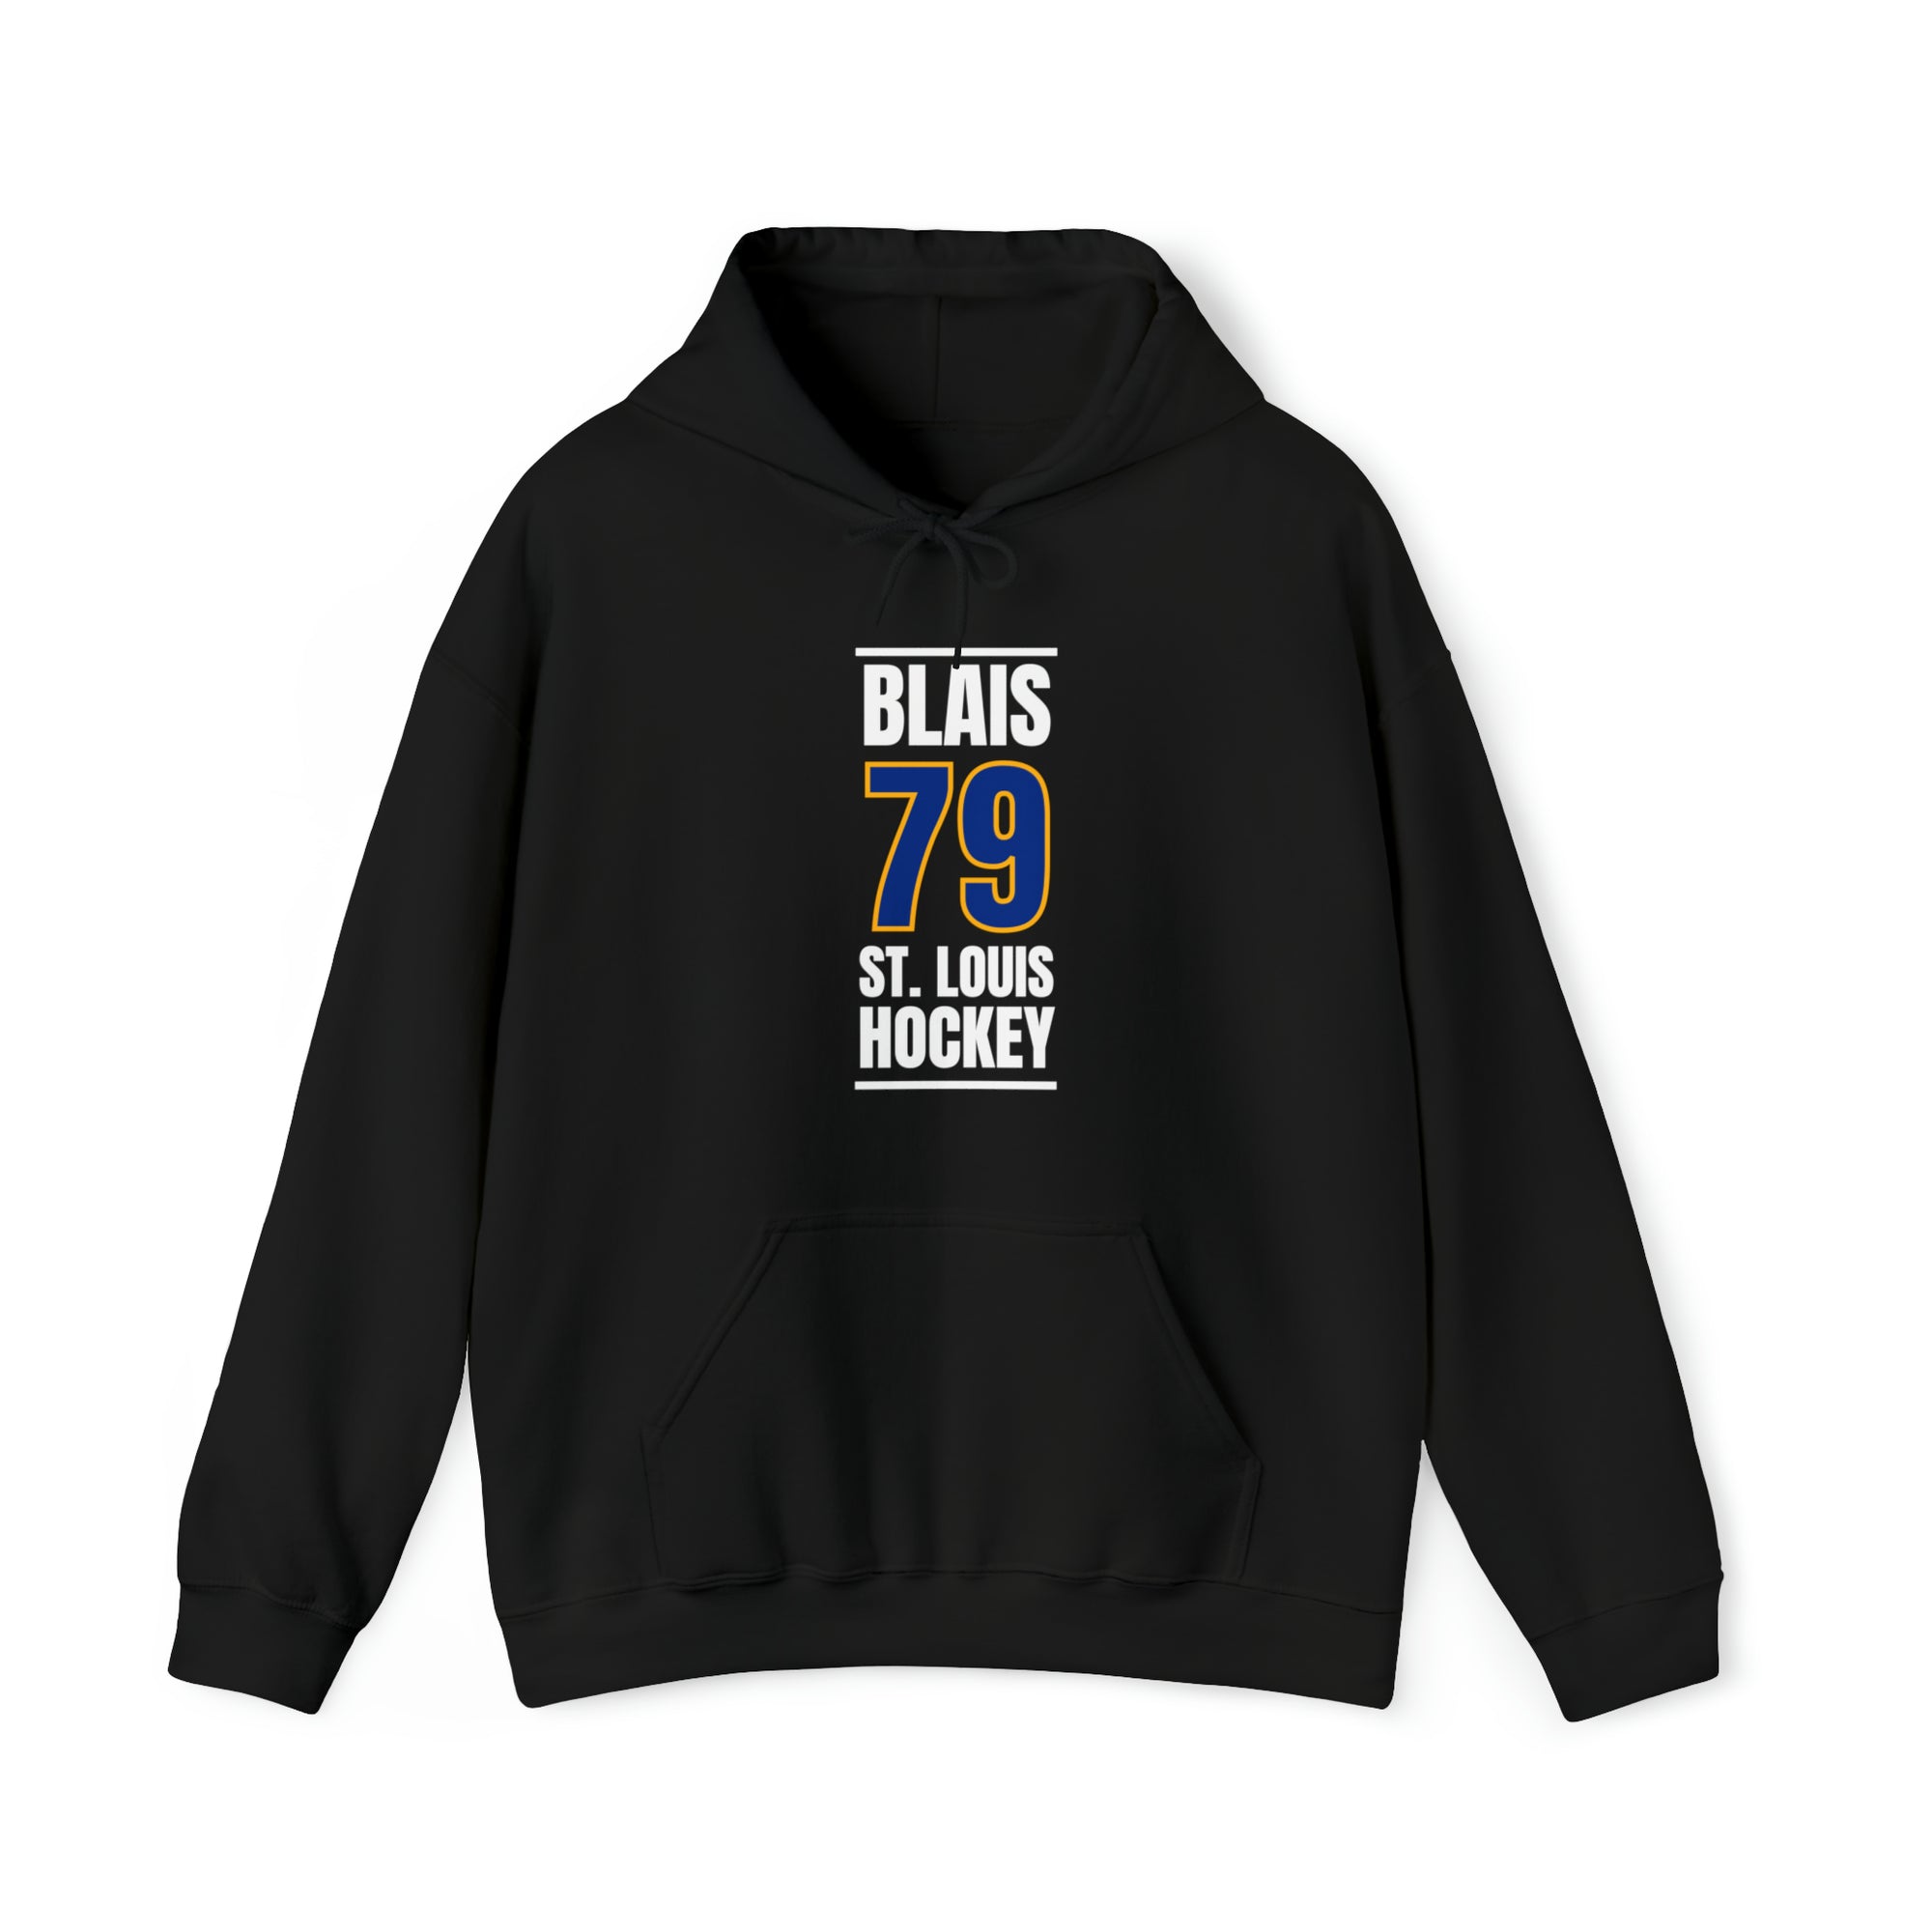 Blais 79 St. Louis Hockey Blue Vertical Design Unisex Hooded Sweatshirt